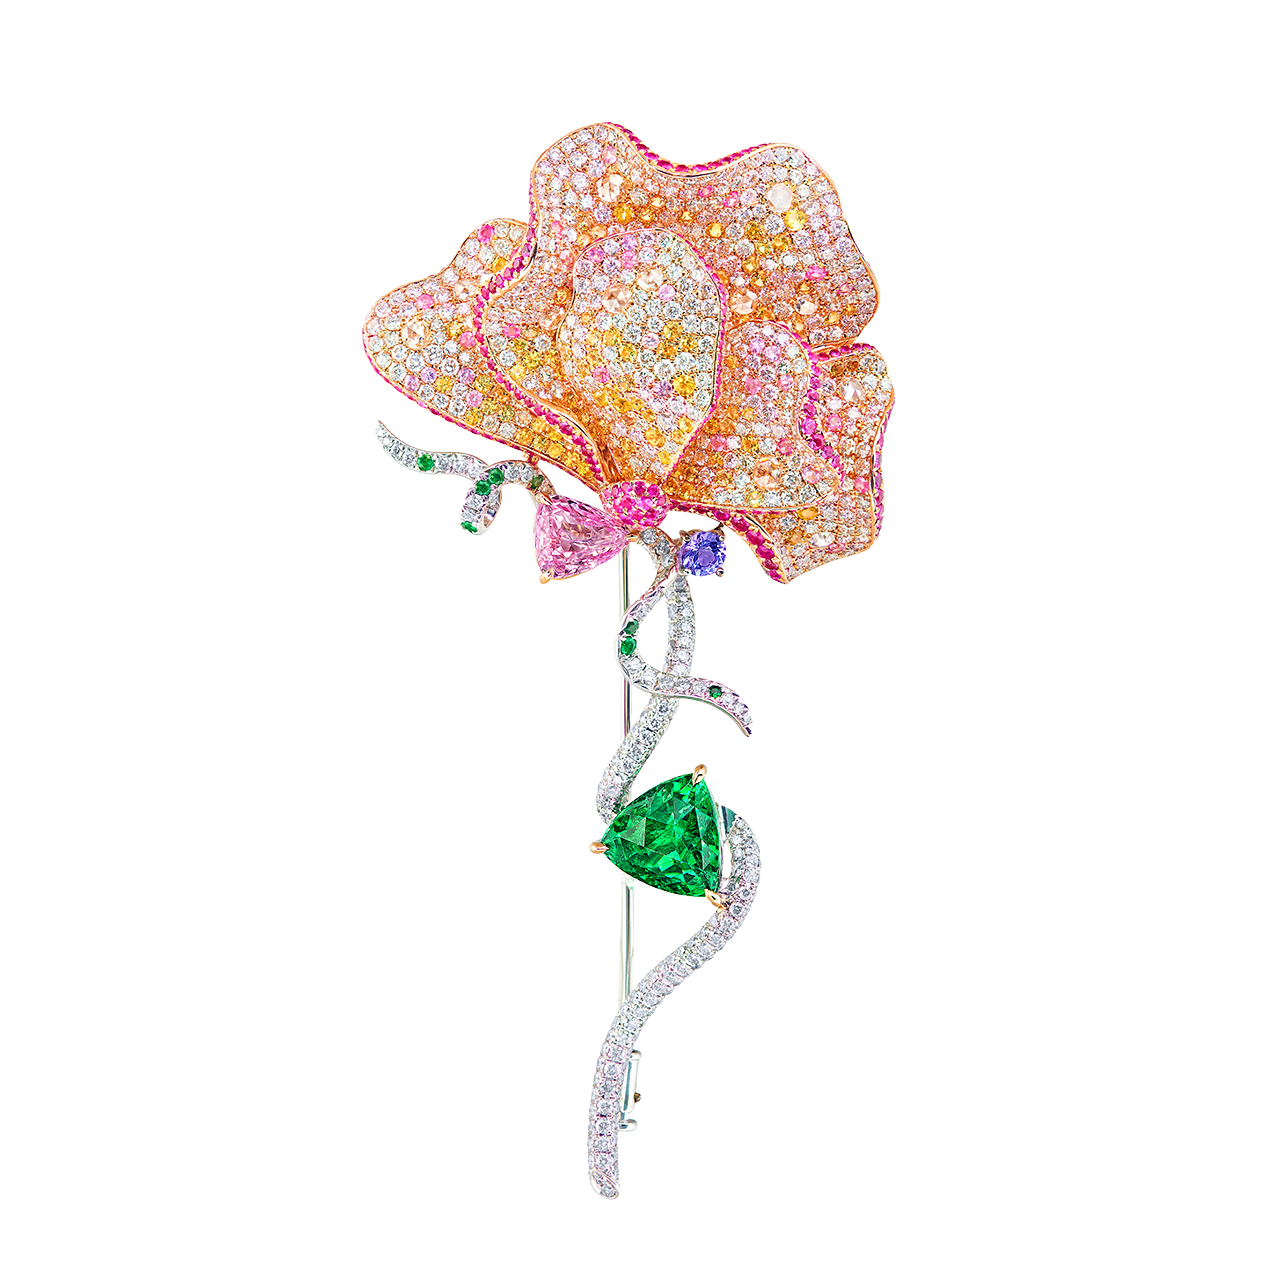 5.09CT沙弗萊 蝴蝶花造型鑽石胸針
Tsavorite, Multi - Colored Gemstone and Diamond Brooch